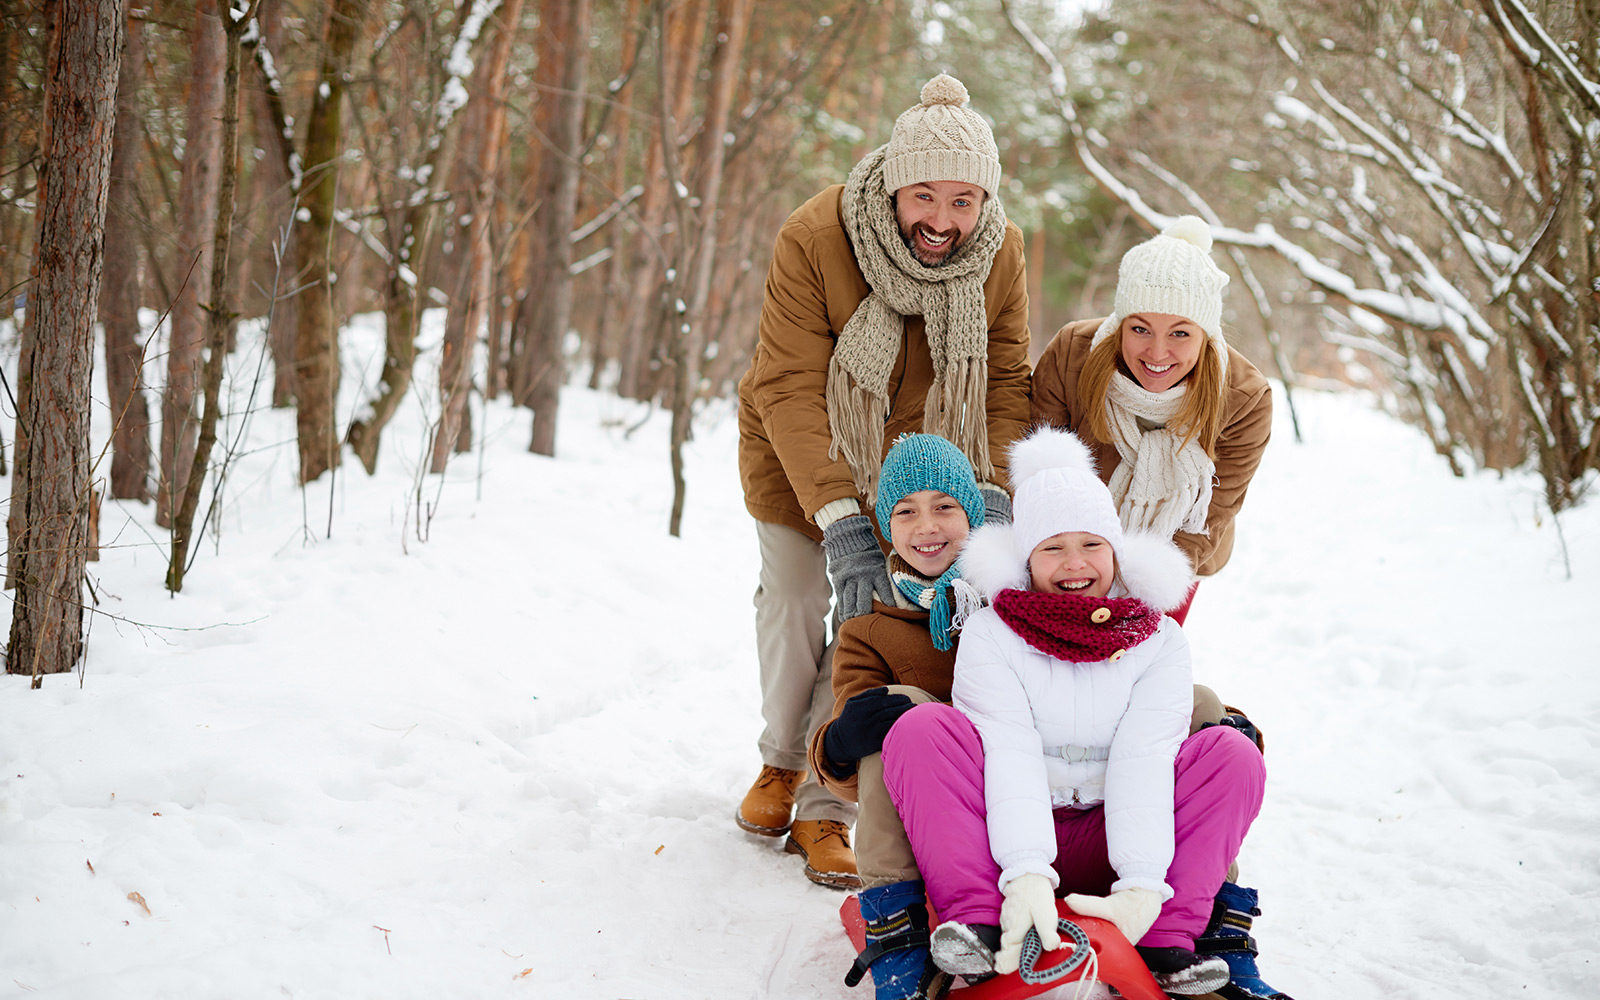 Joyful family sledding